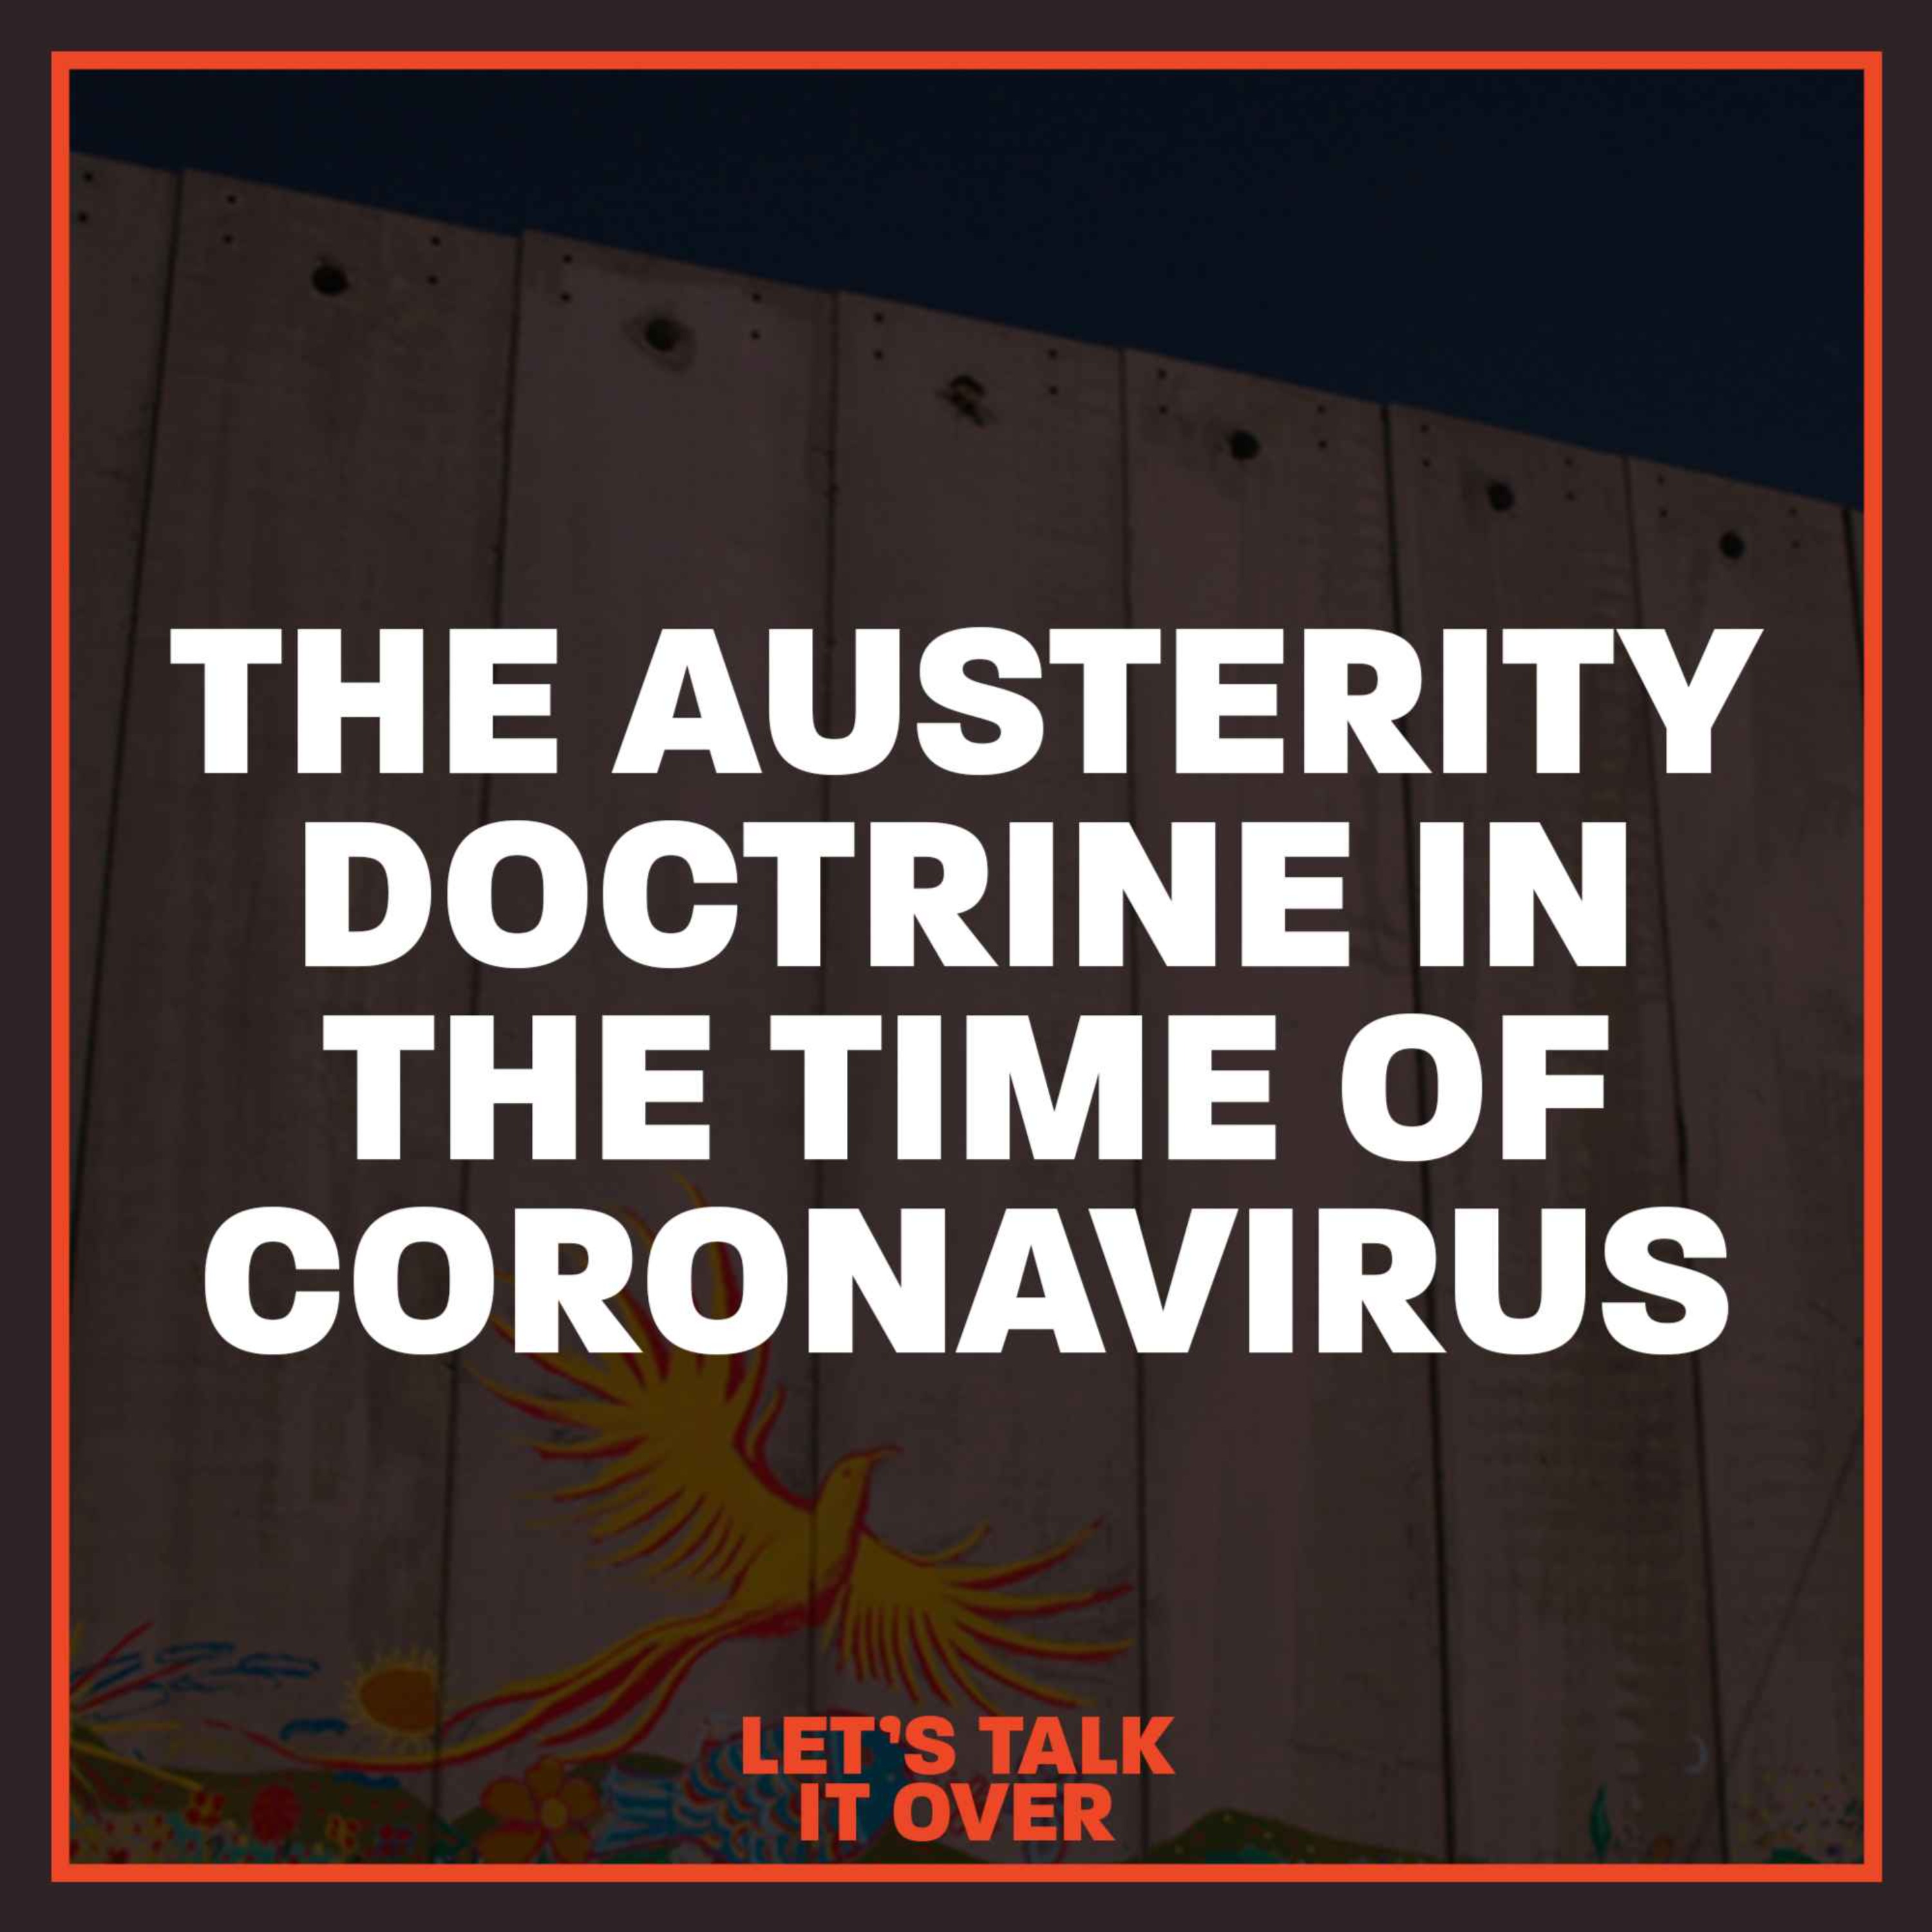 The Austerity Doctrine in The Time of Coronavirus